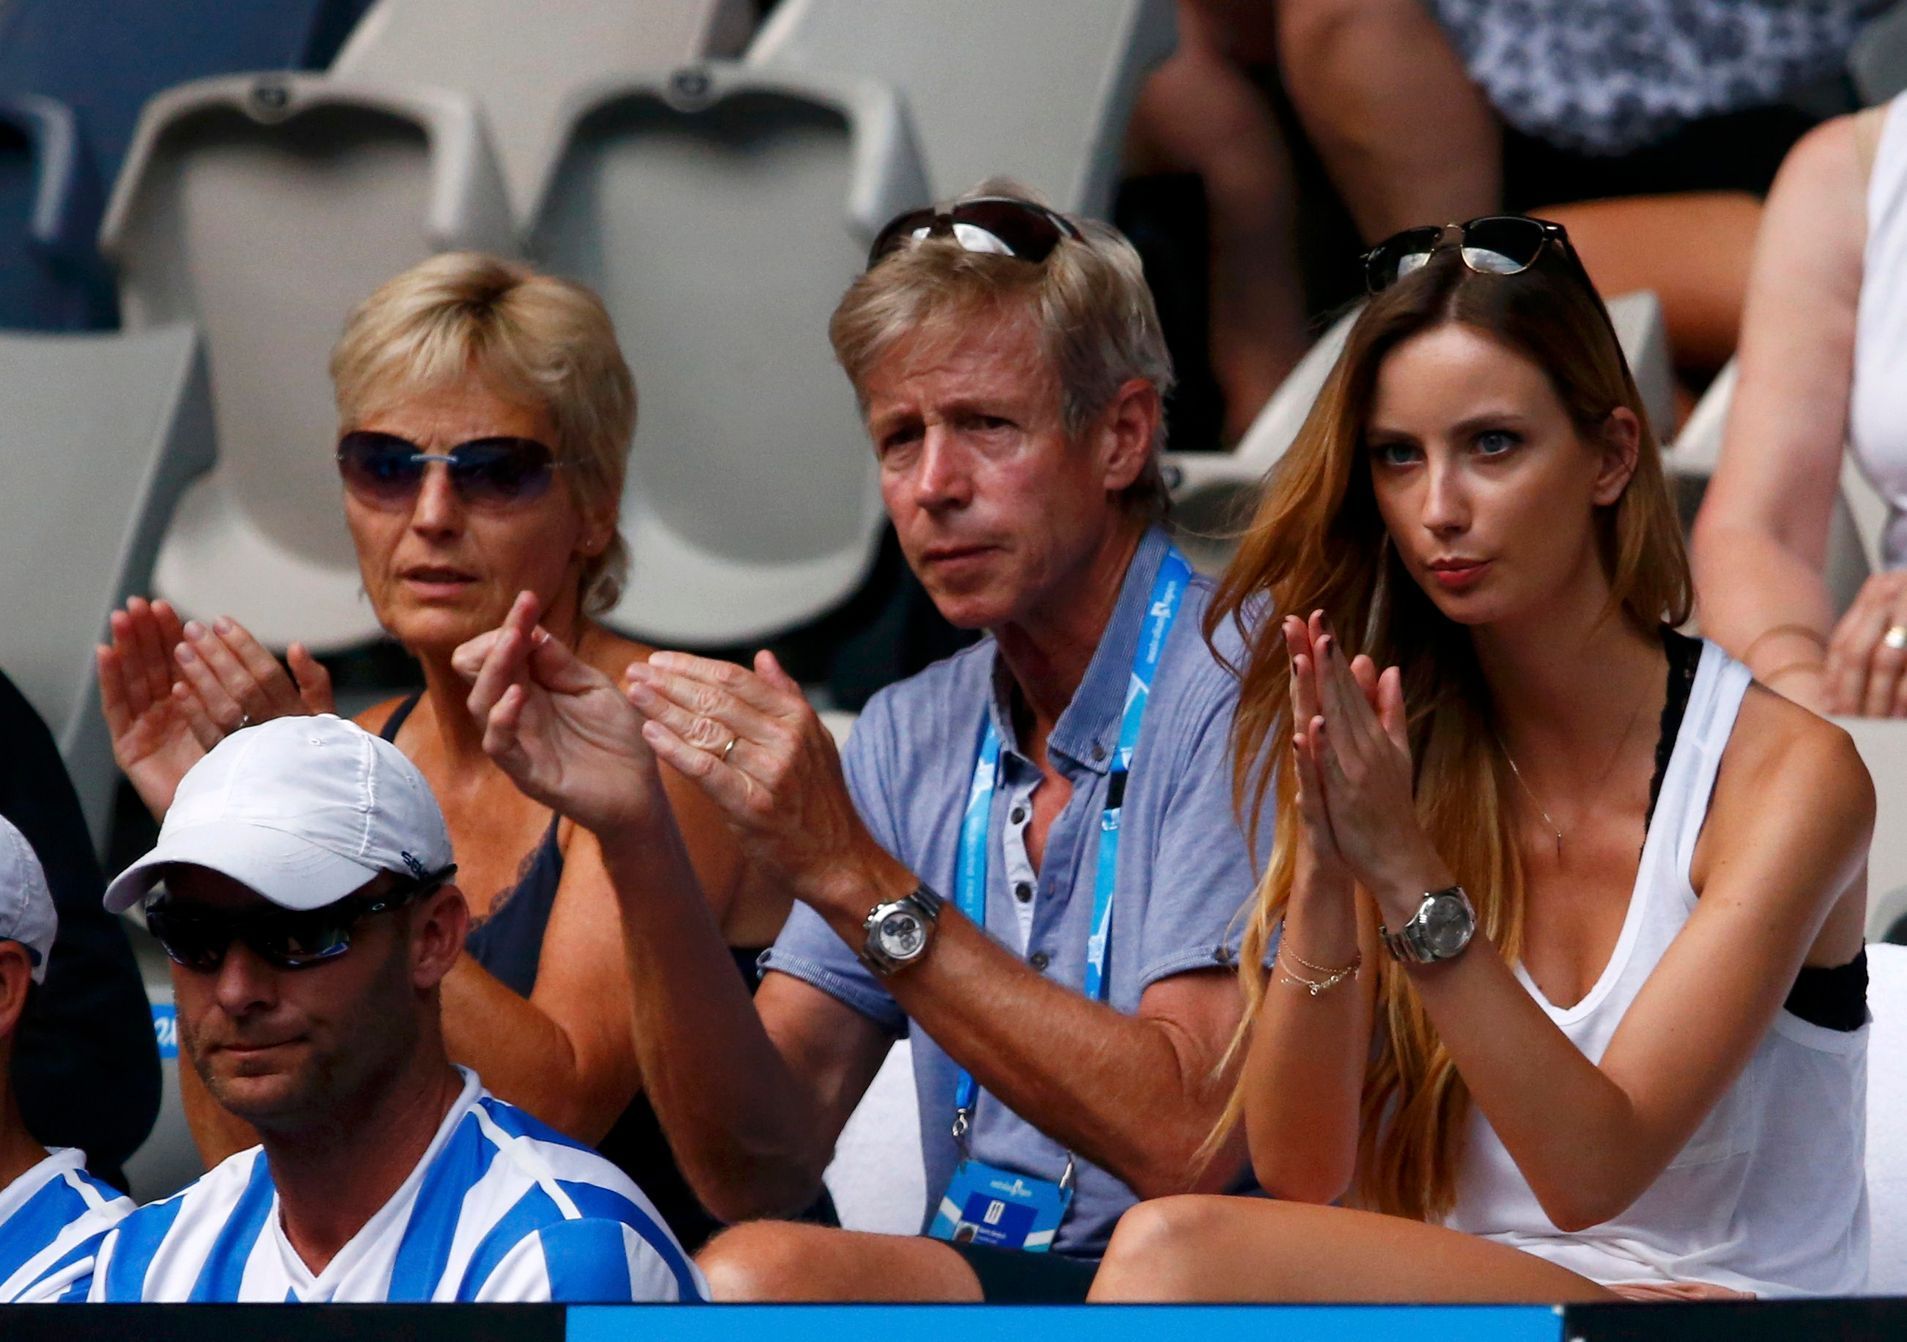 Ester Satorova, the girlfriend of Tomas Berdych of Czech Republic, watches his men's singles match at the Australian Open 2014 tennis tournament in Melbourne